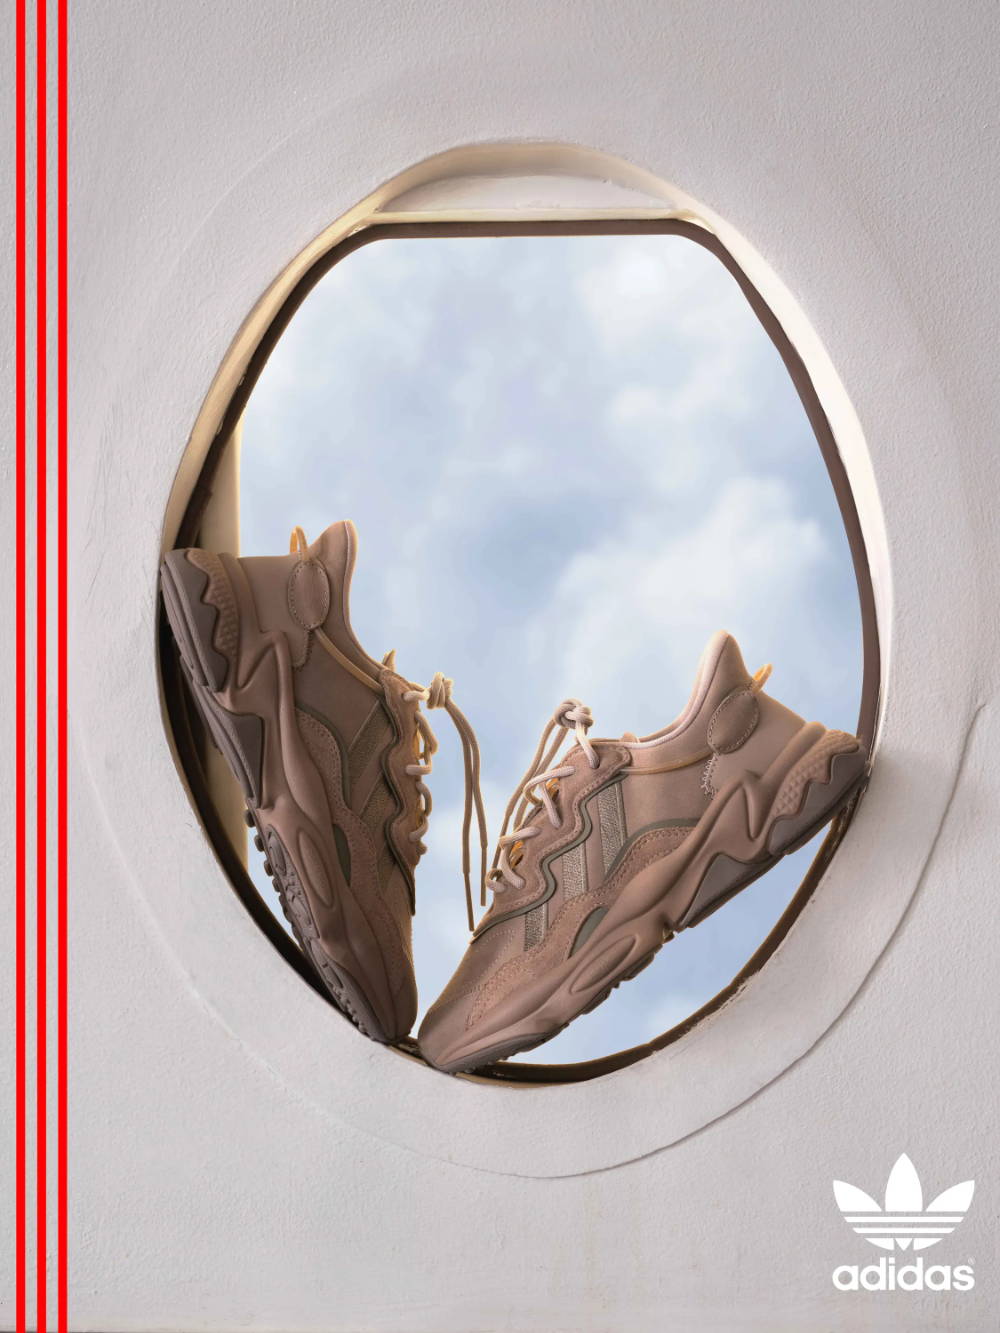 tan adidas shoes in airplane window